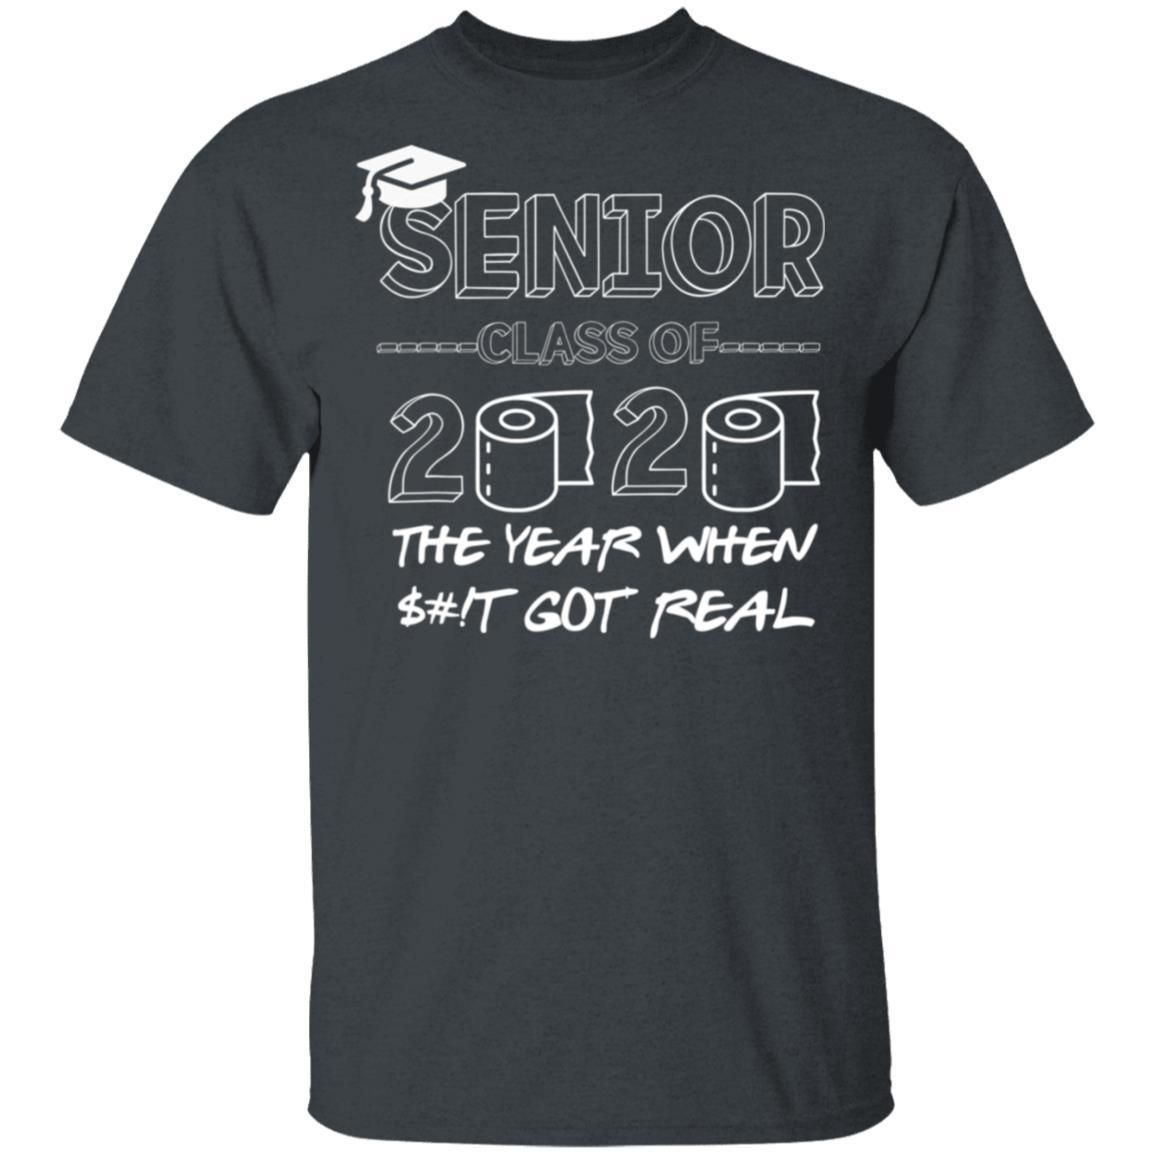 Senior Class of 2020 The Year When Sh!t Got Real Graduation shirts